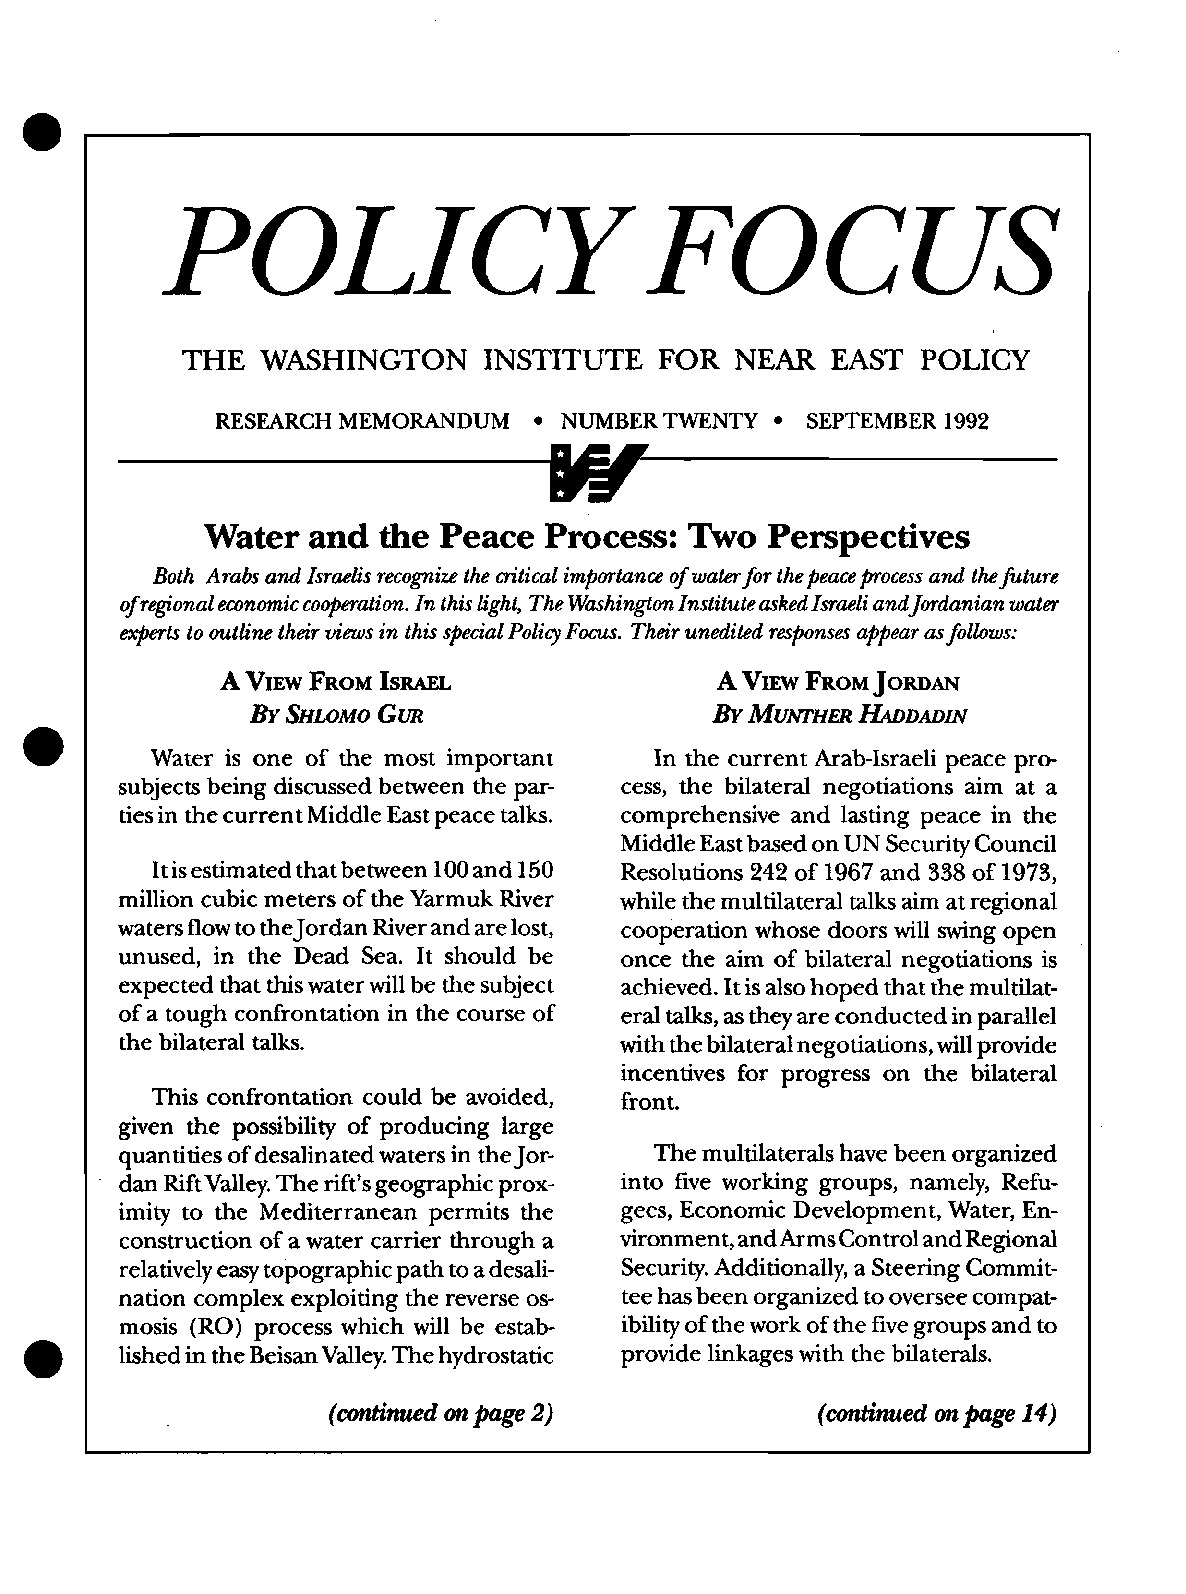 PolicyFocus20.pdf